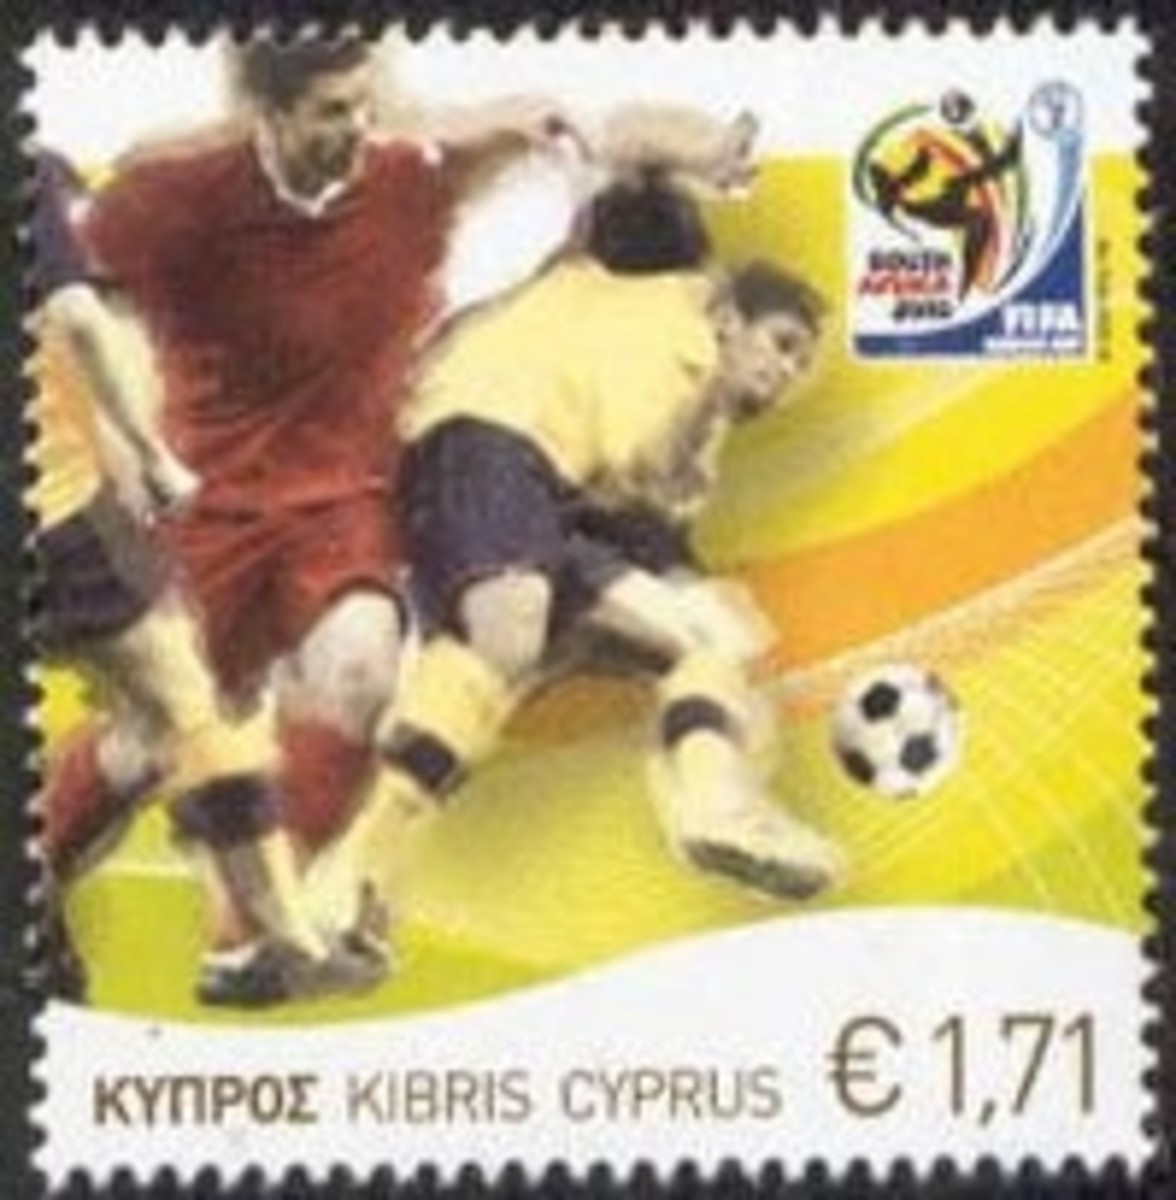 Cyprus postal administration